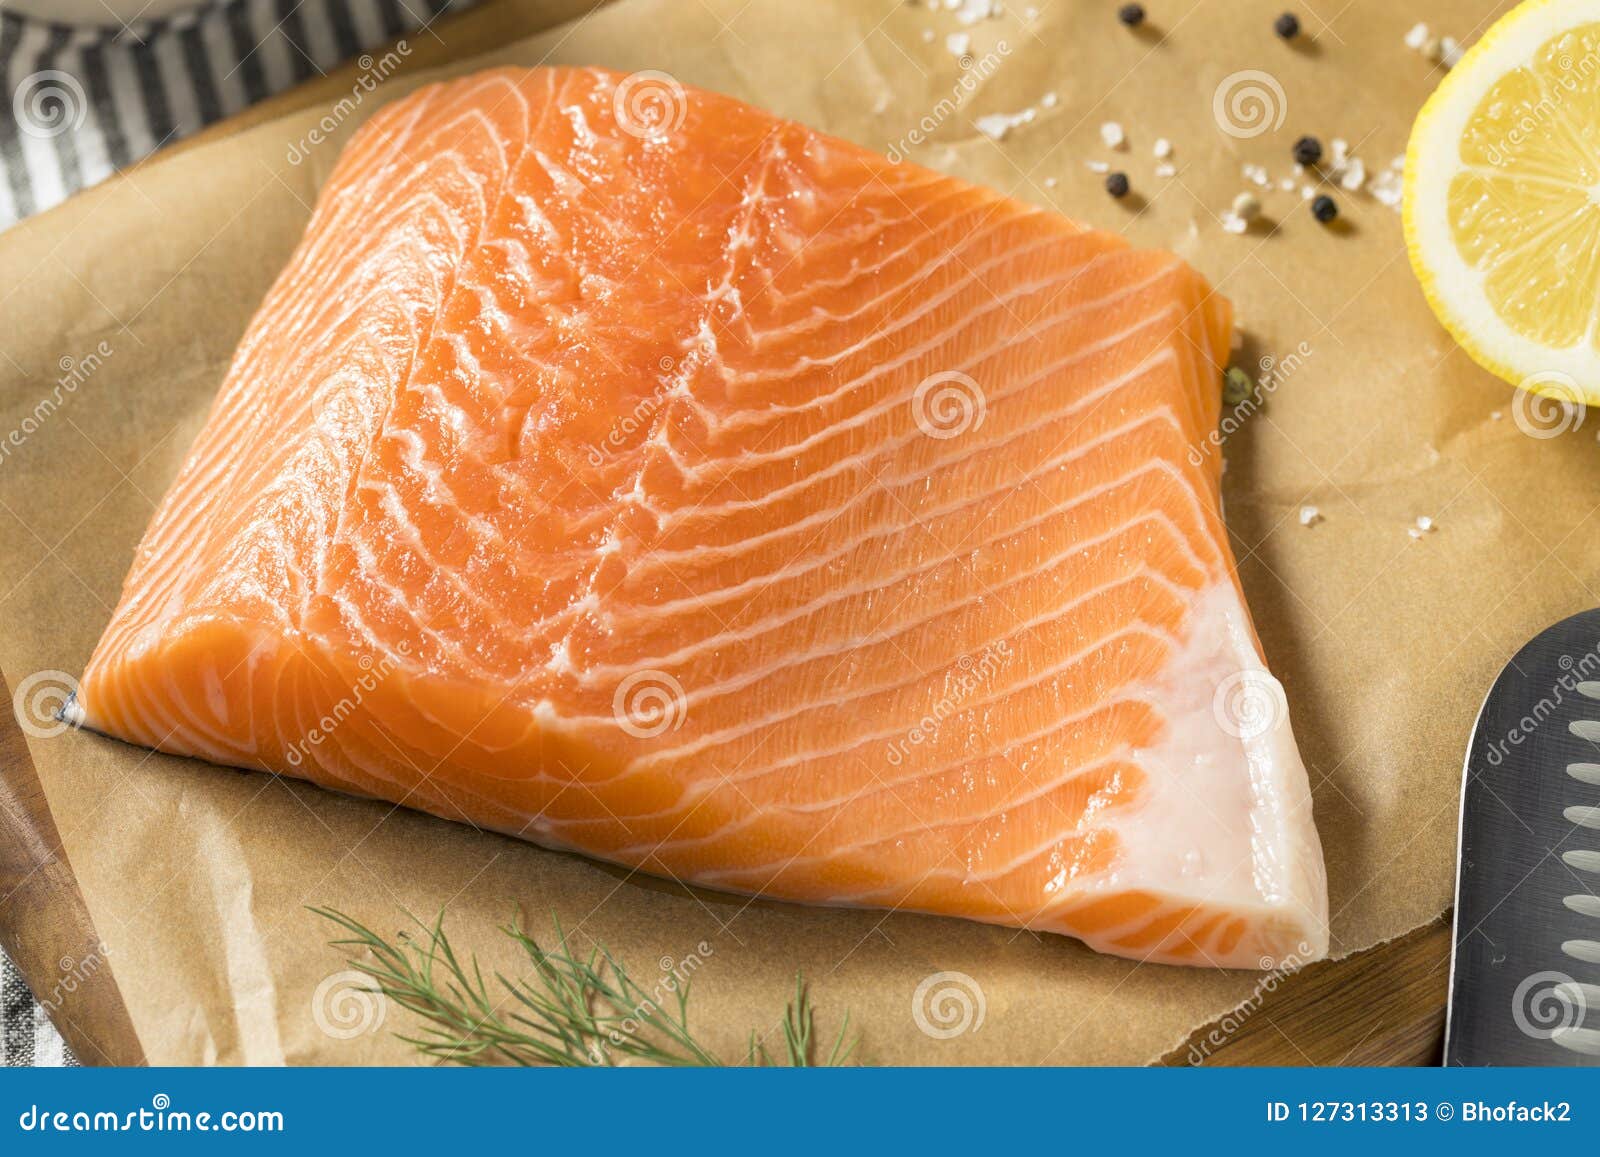 raw organic atlantic salmon fillet